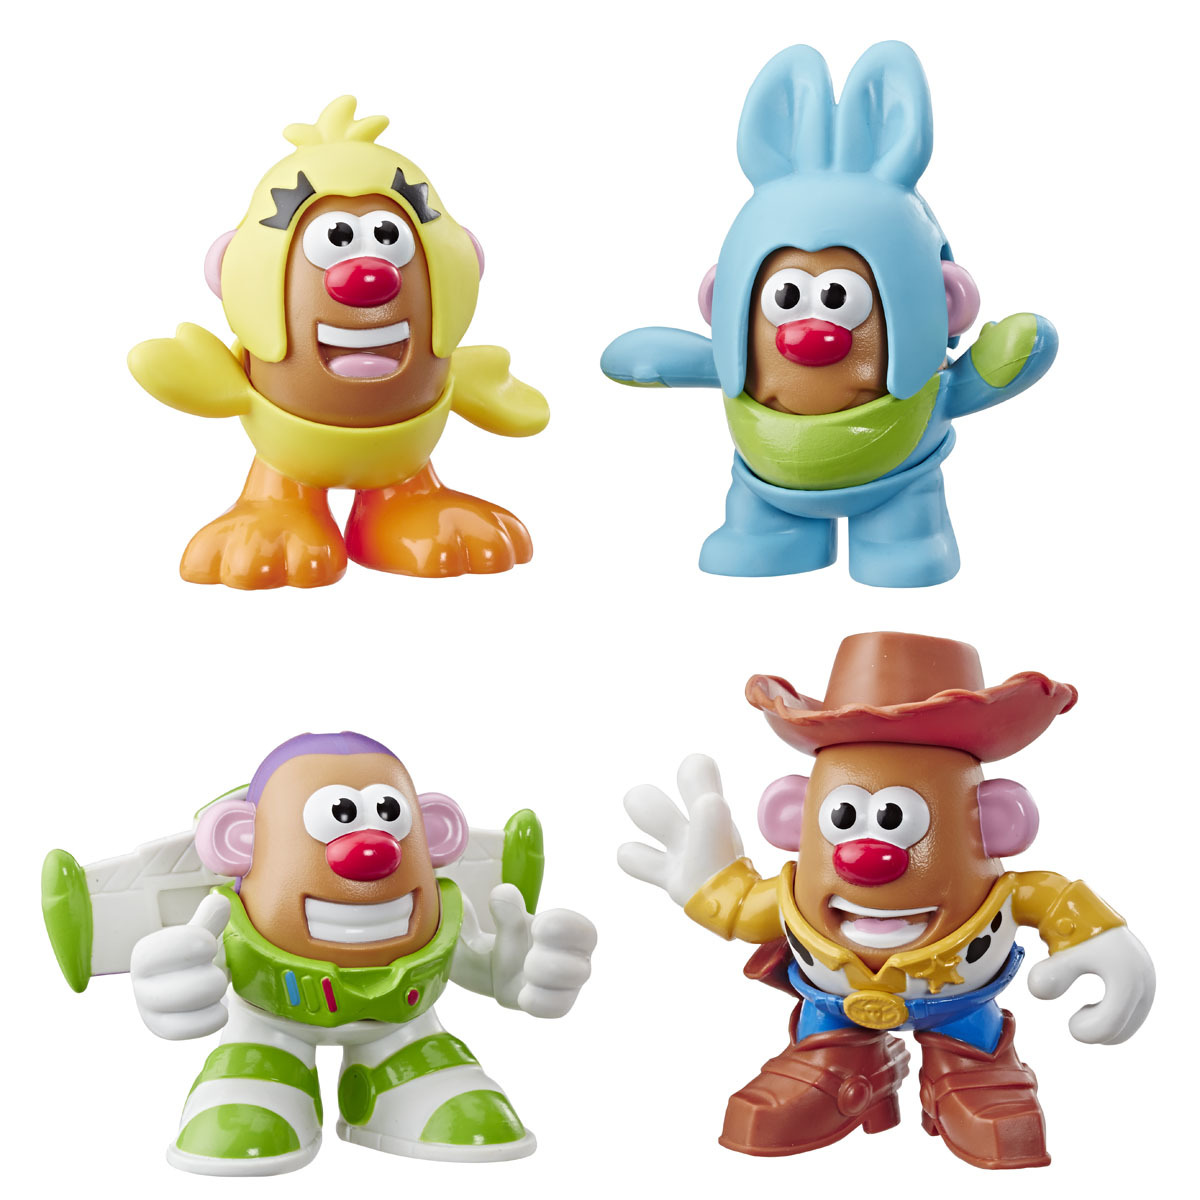 Disney Pixar Toy Story 4 Mini Mr Potato Head 4 Pack The Entertainer